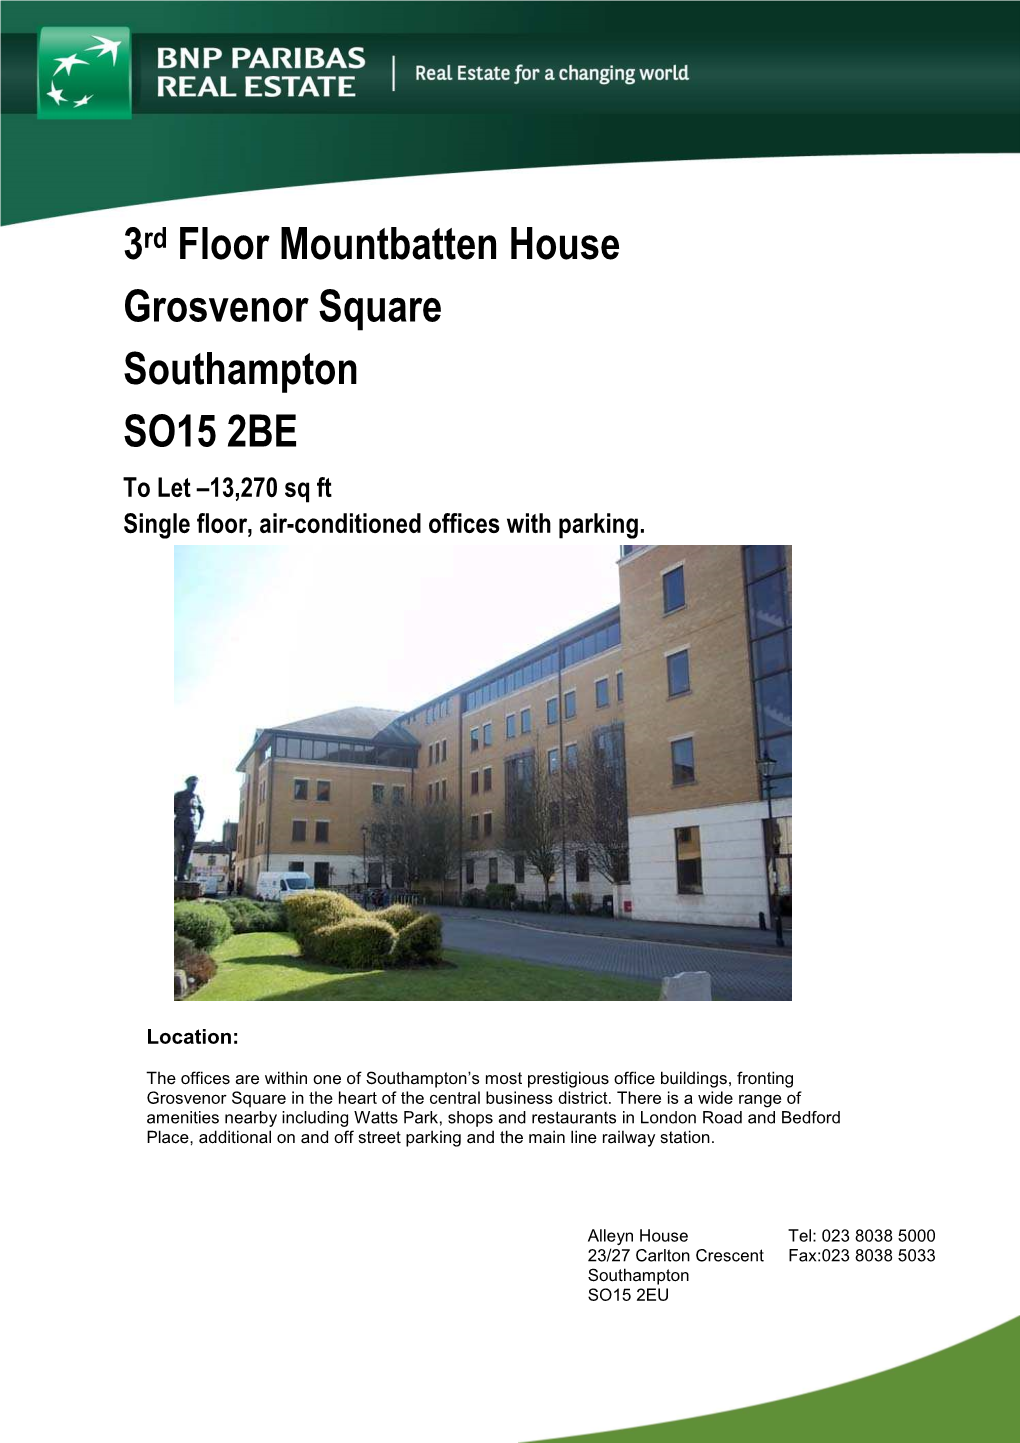 Southampton Grosvenor Square Mountbatten House